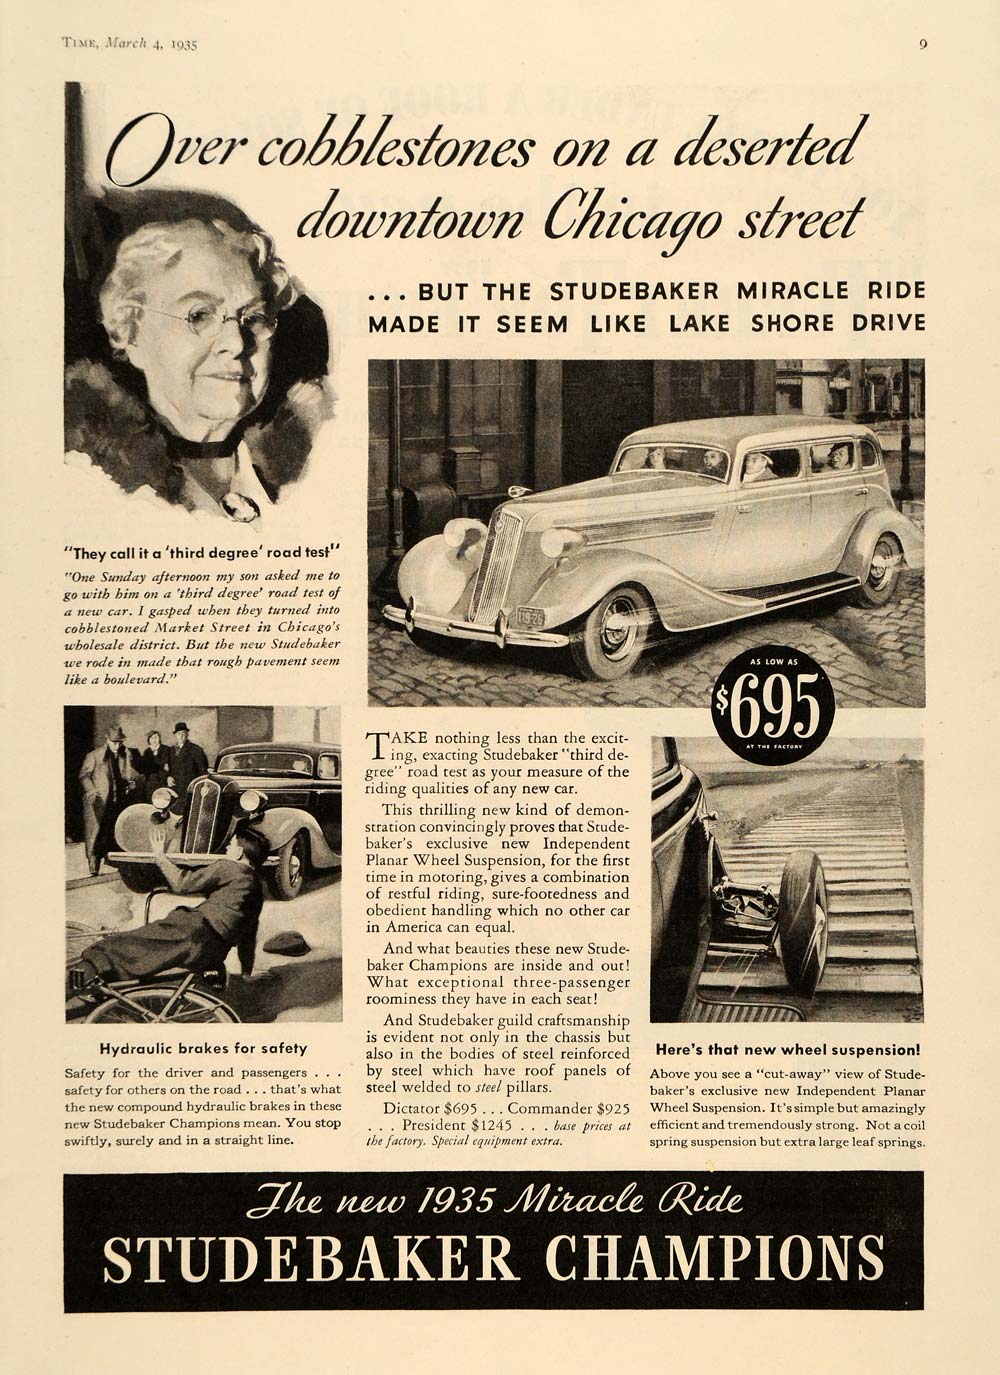 1935 Ad Miracle Ride Studebaker Lake Shore Dr. Chicago - ORIGINAL TM7